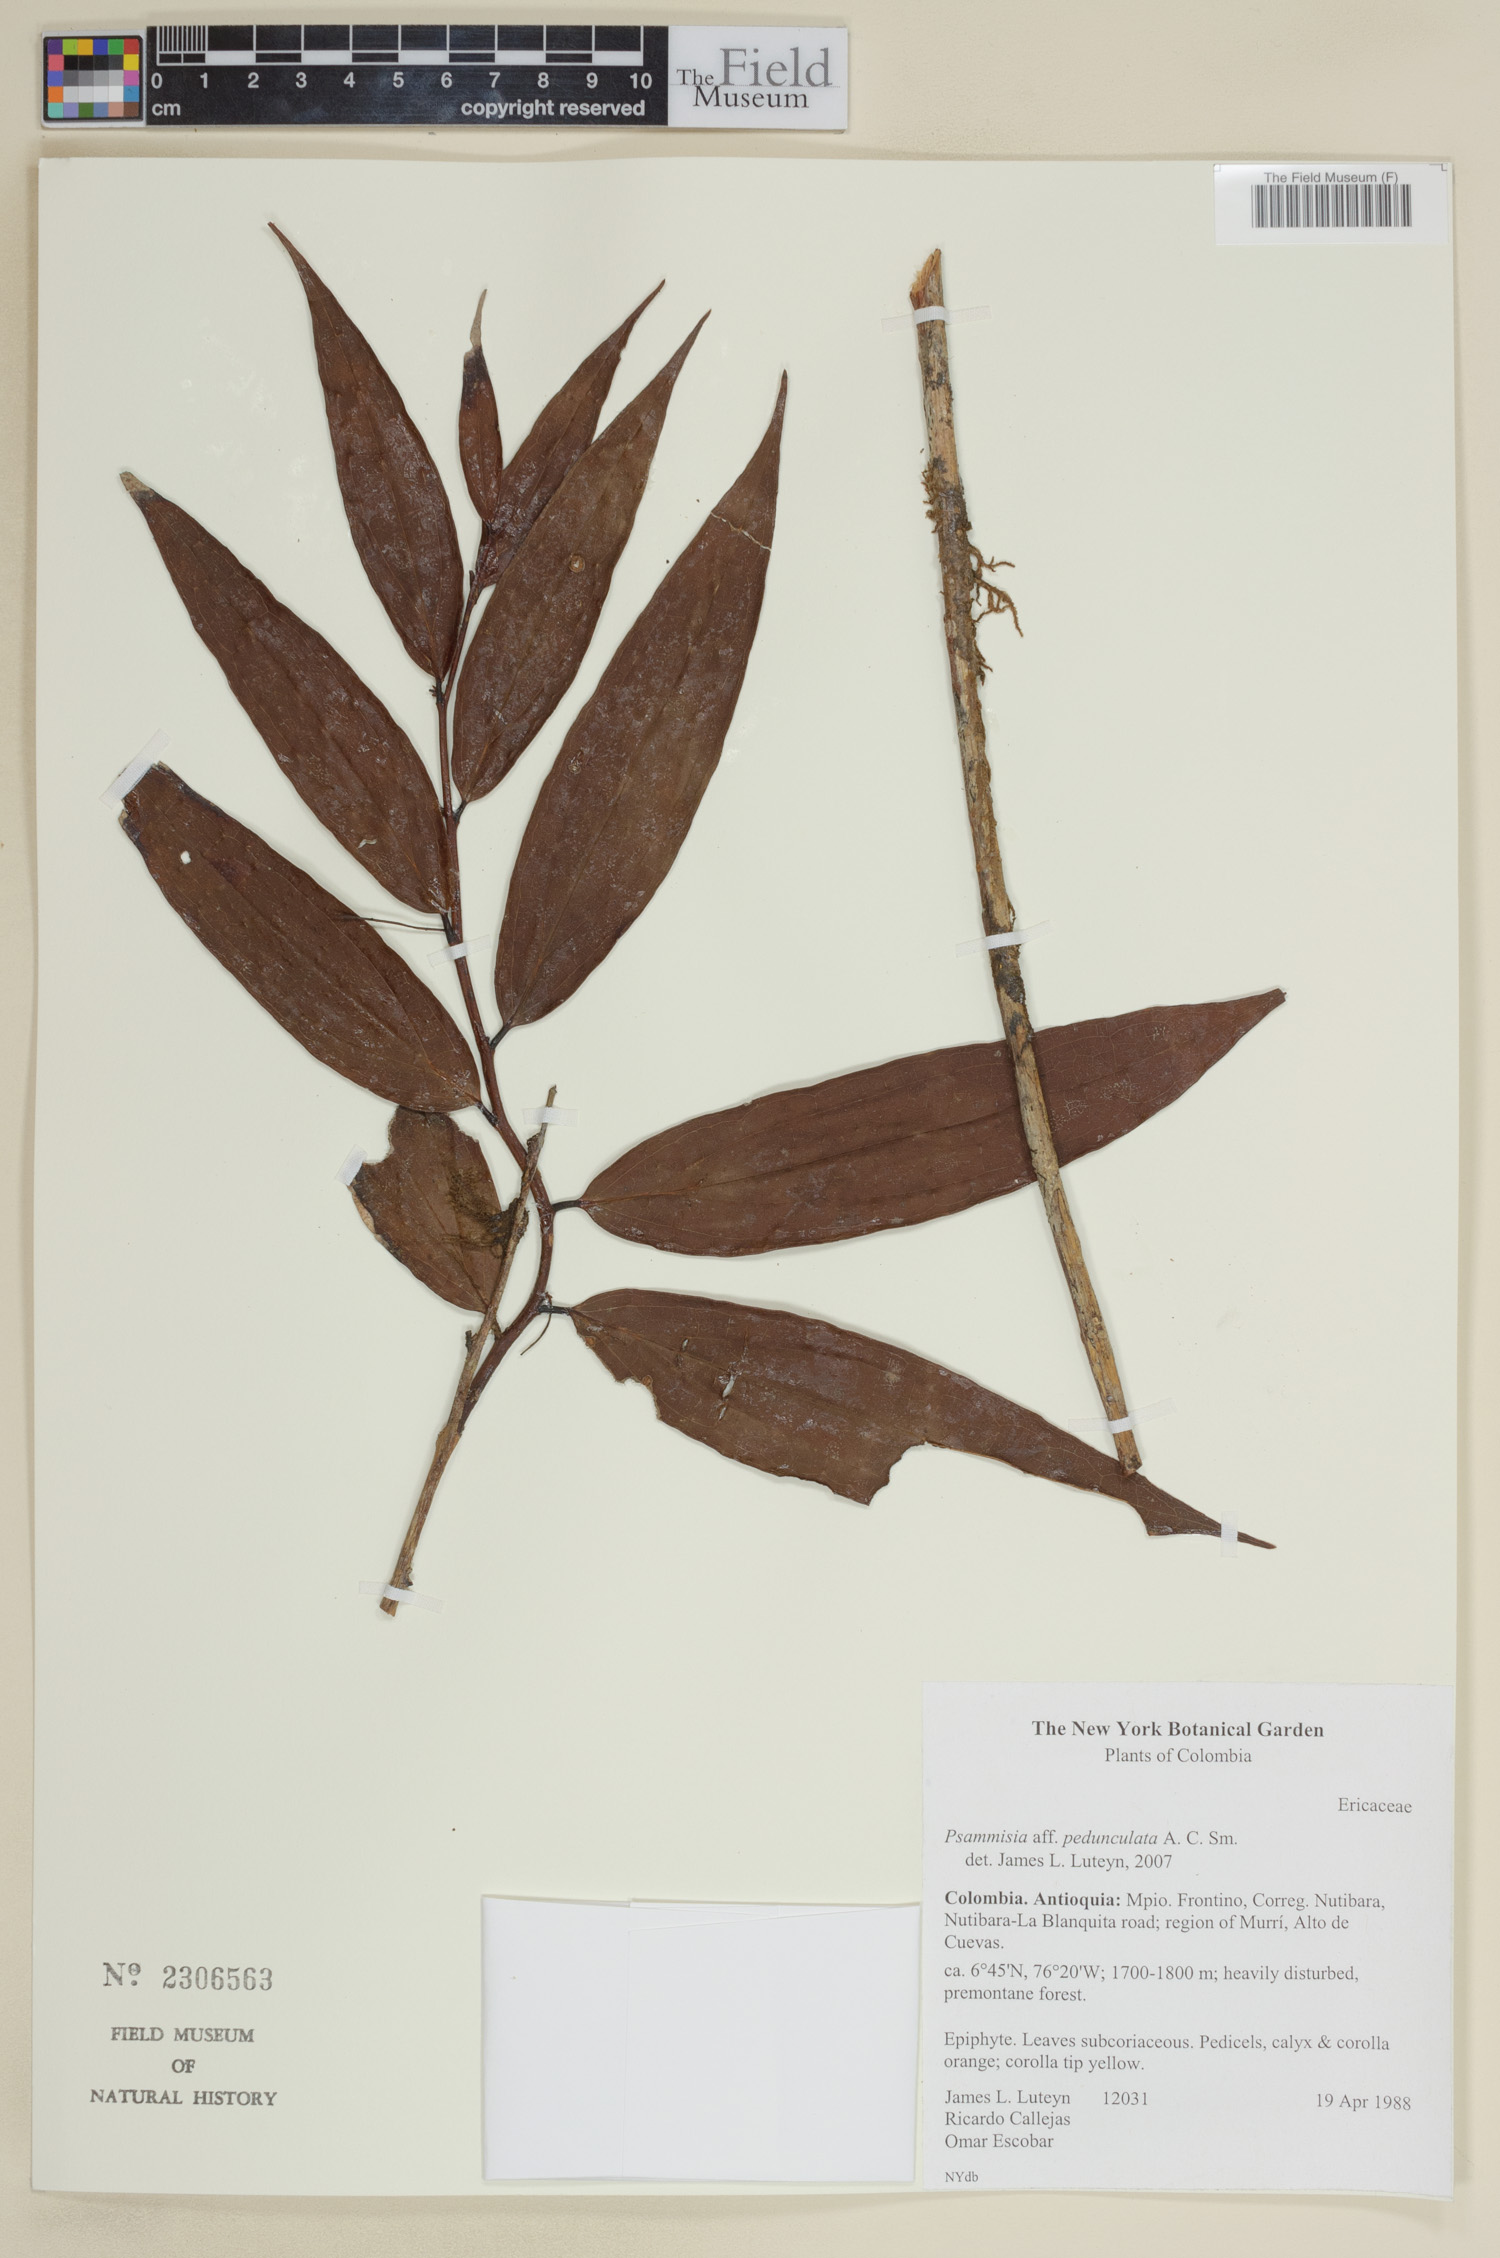 Psammisia pedunculata image